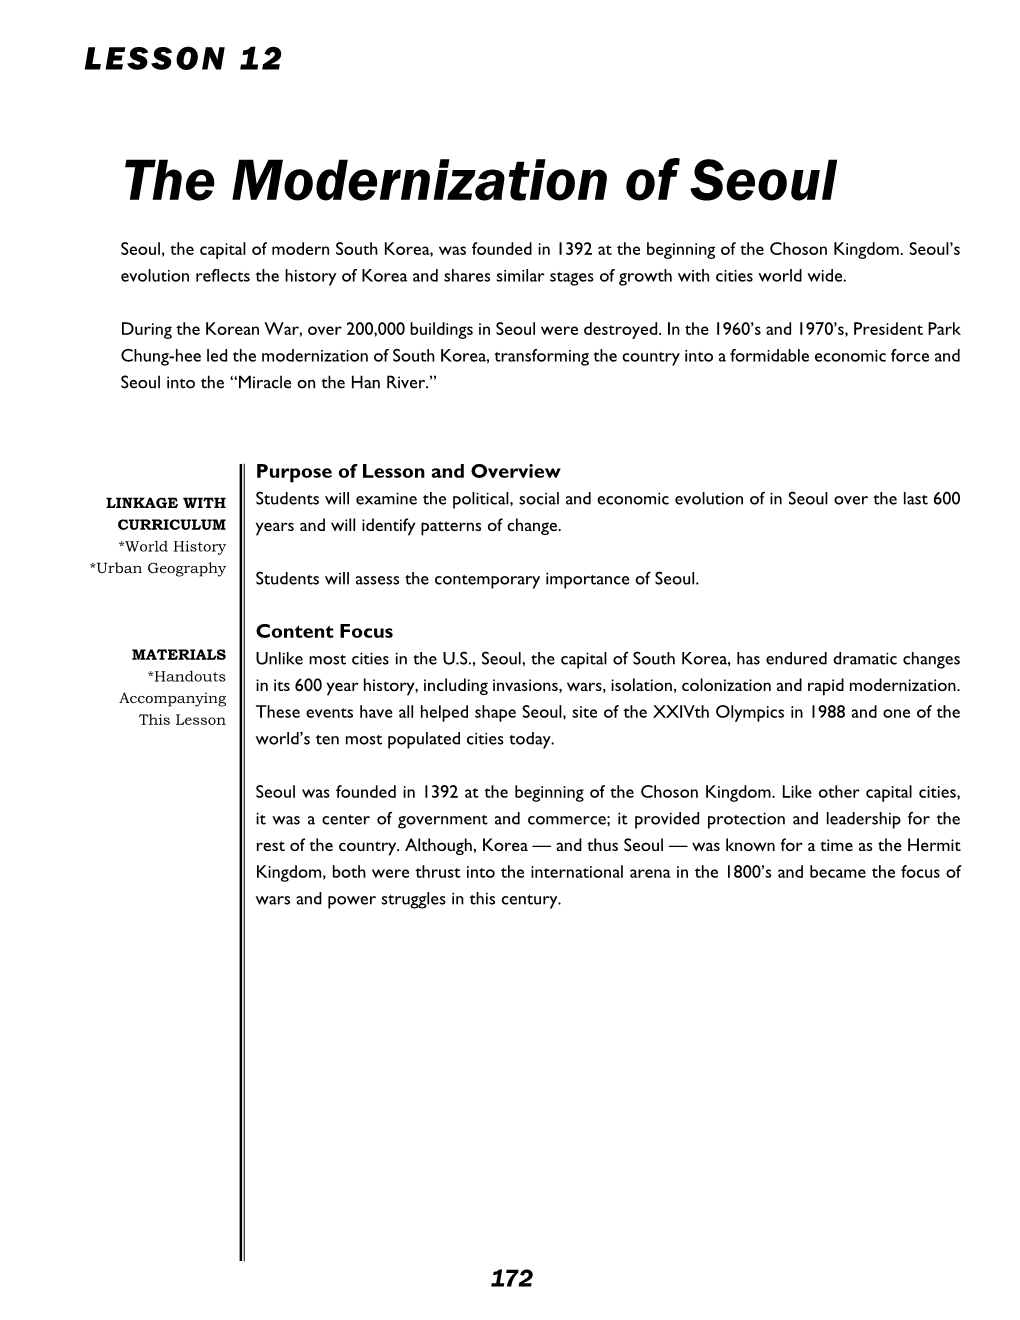 The Modernization of Seoul